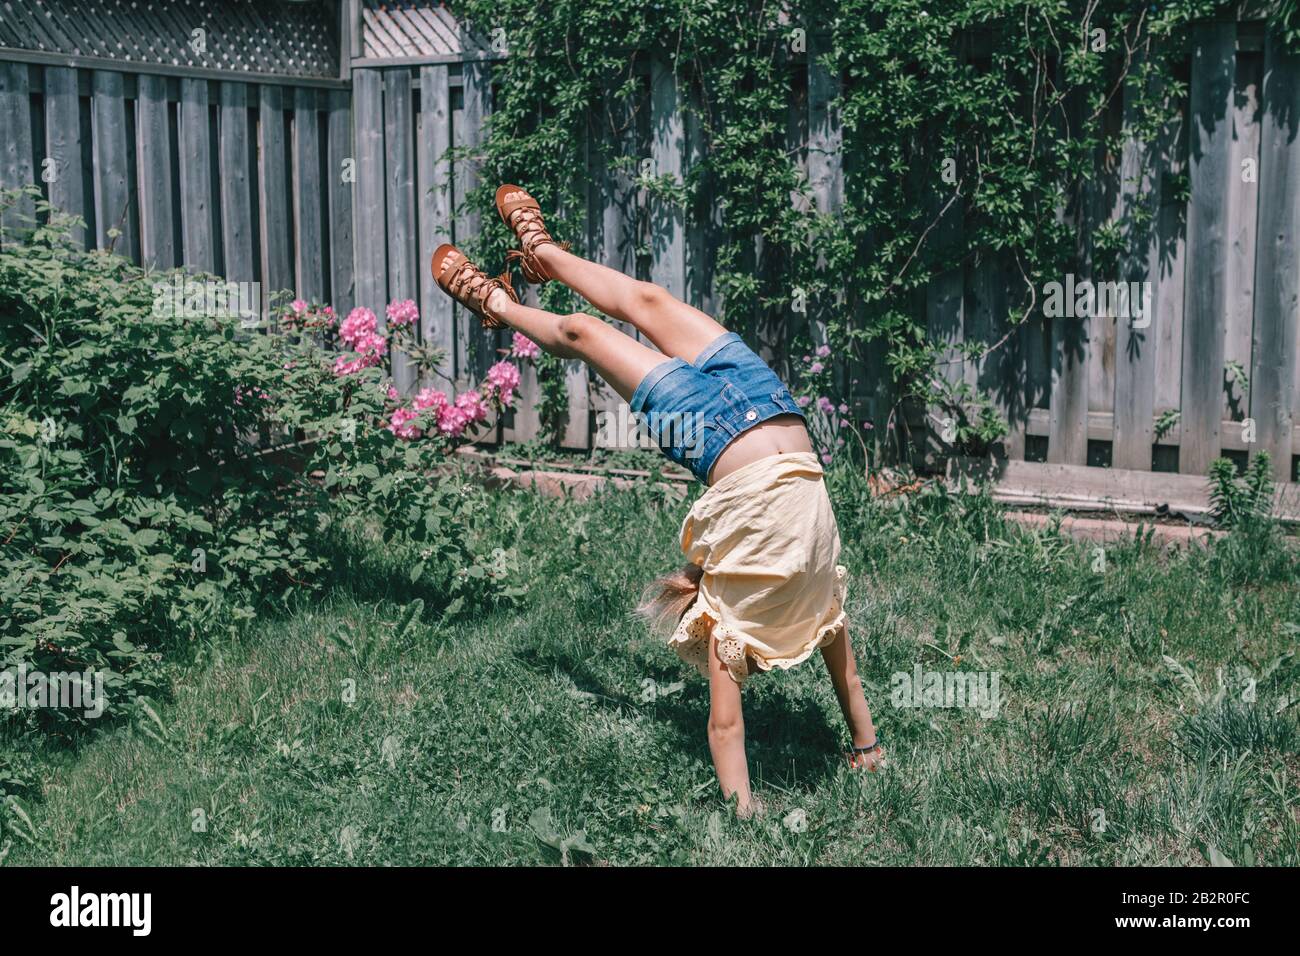 Funny child teenage girl doing cartwheel on backyard. Excited joyful kid playing outdoor. Happy lifestyle childhood and freedom spirit concept. Season Stock Photo